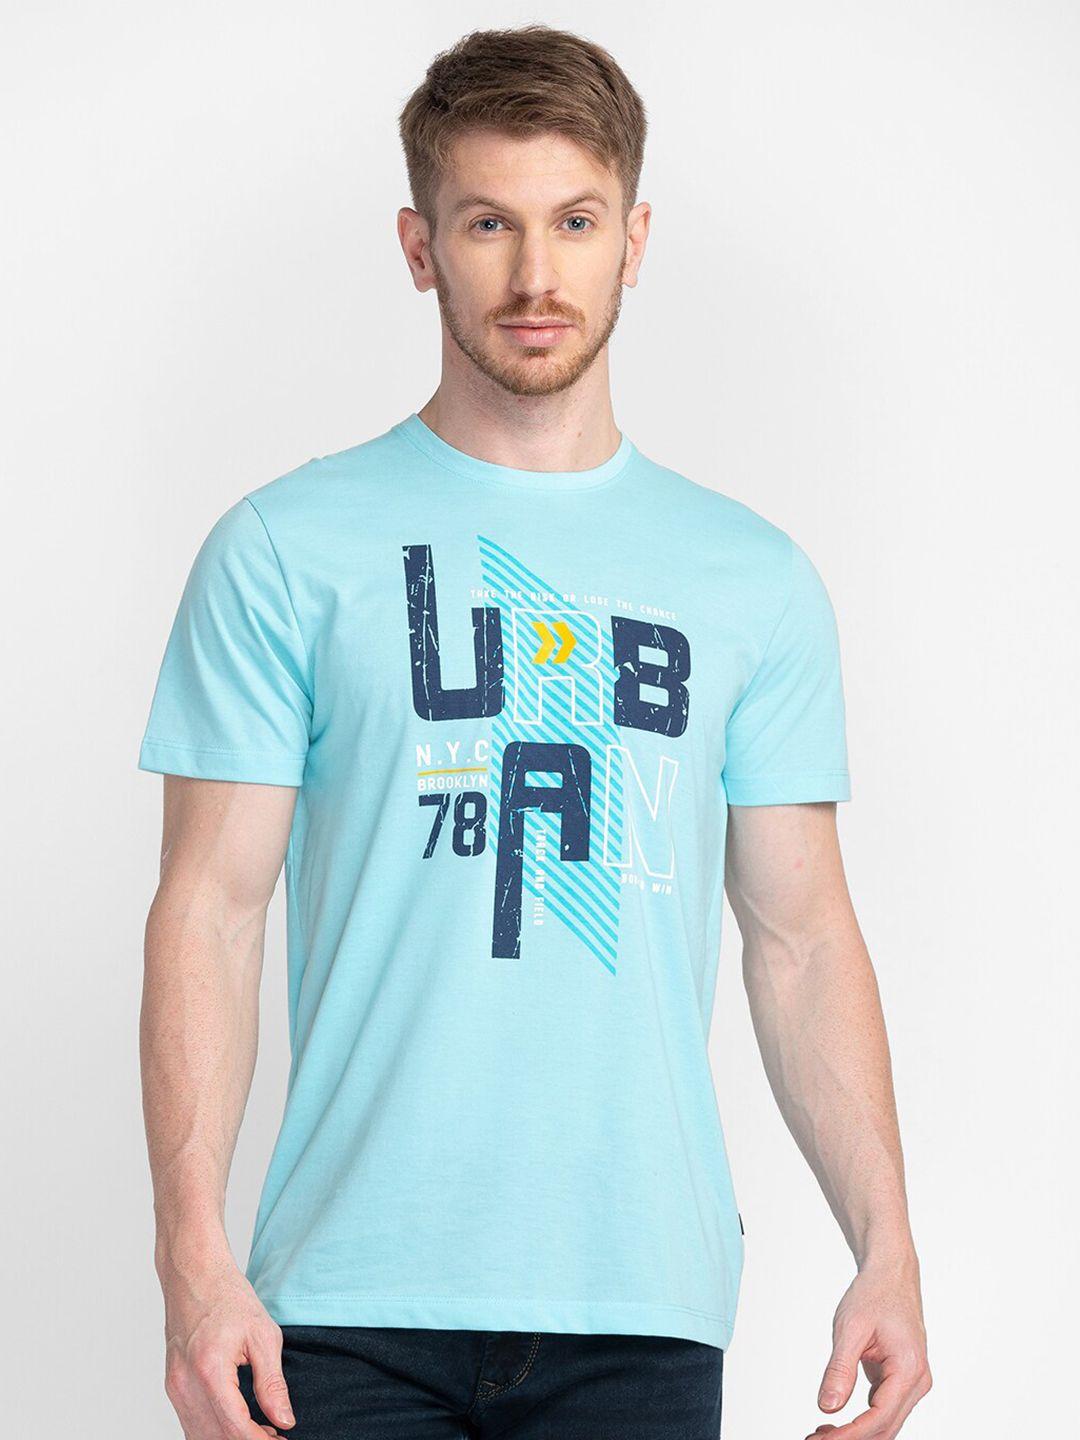 tessio men blue typography printed applique t-shirt